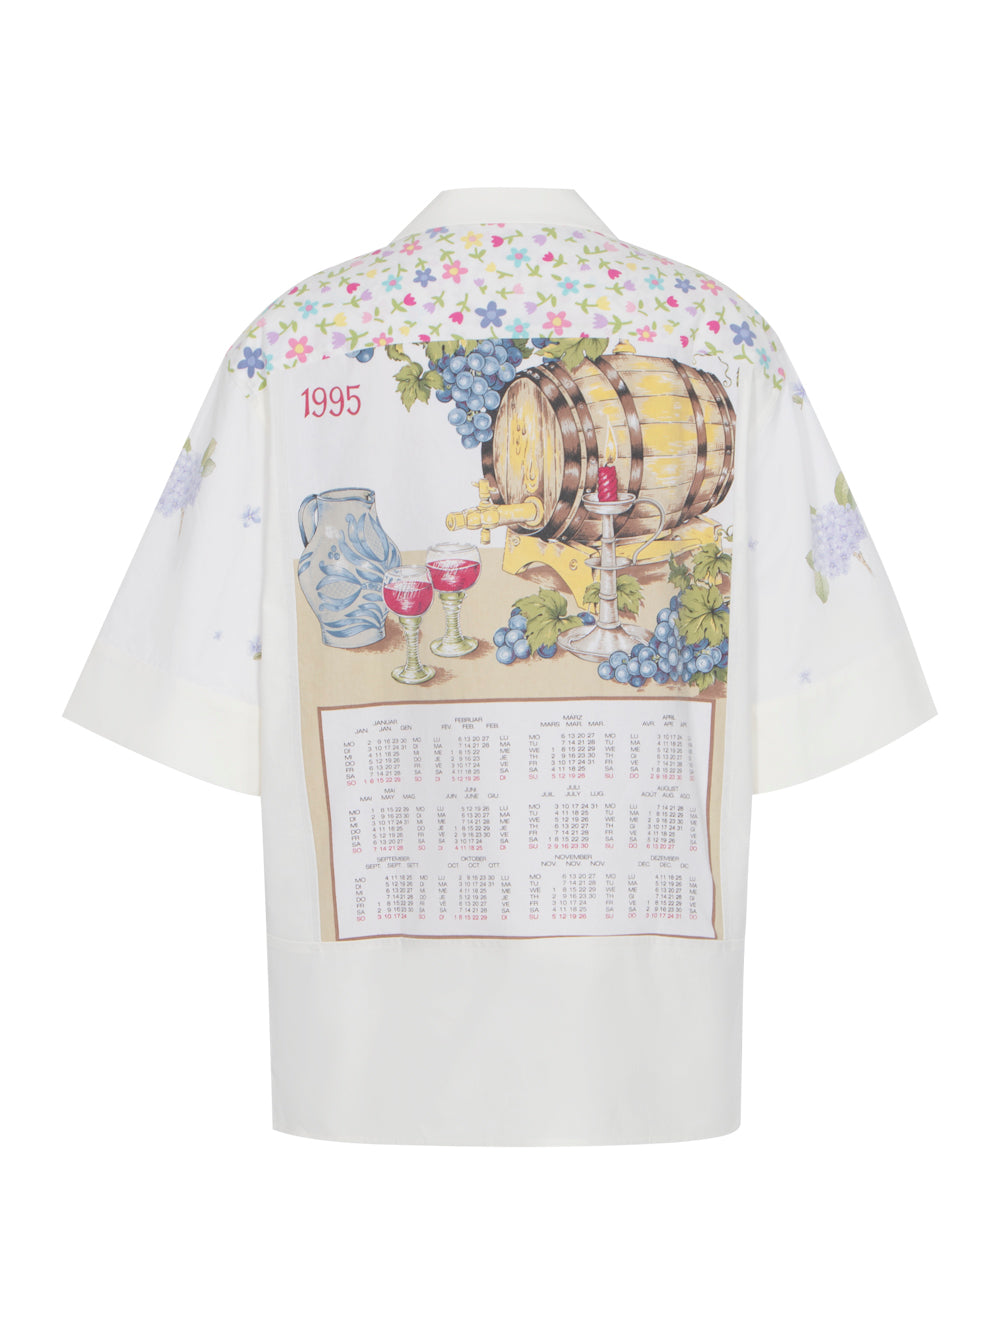 Regenerated Household Linen Calendar Bowling Shirt (Multicolor)